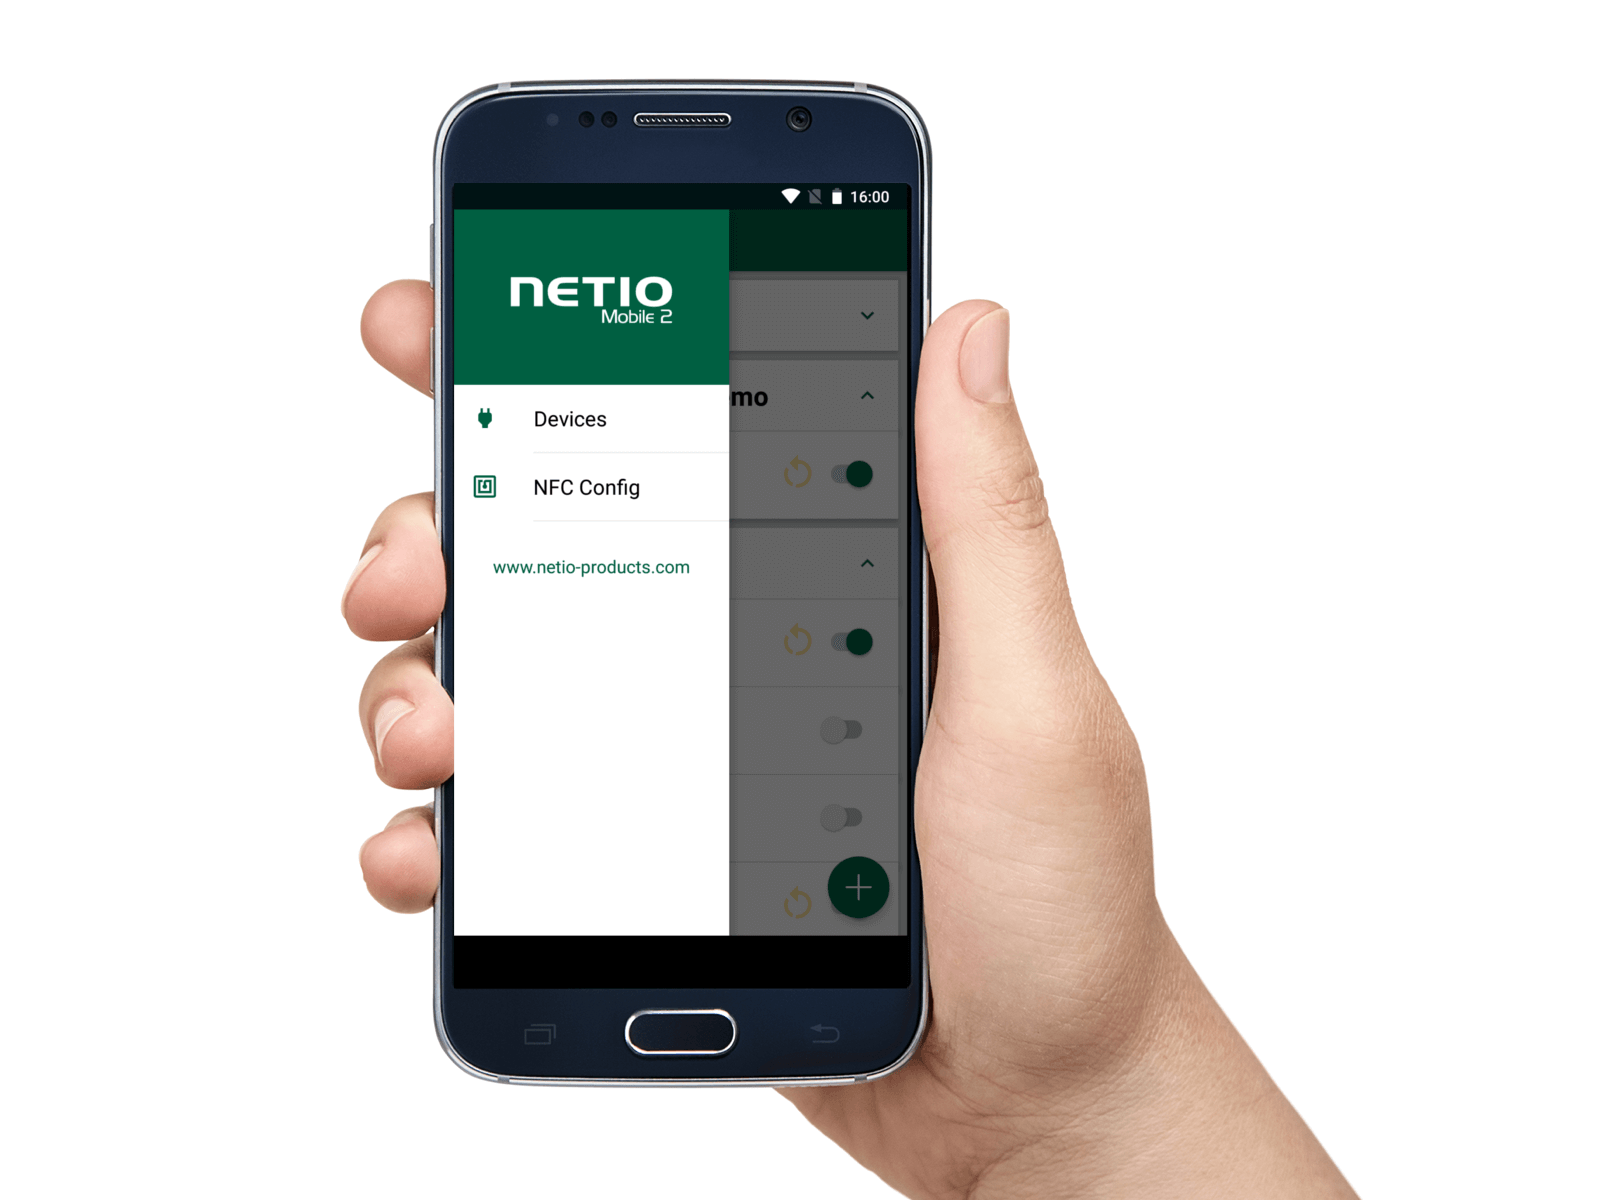 NETIO Mobile2 main menu